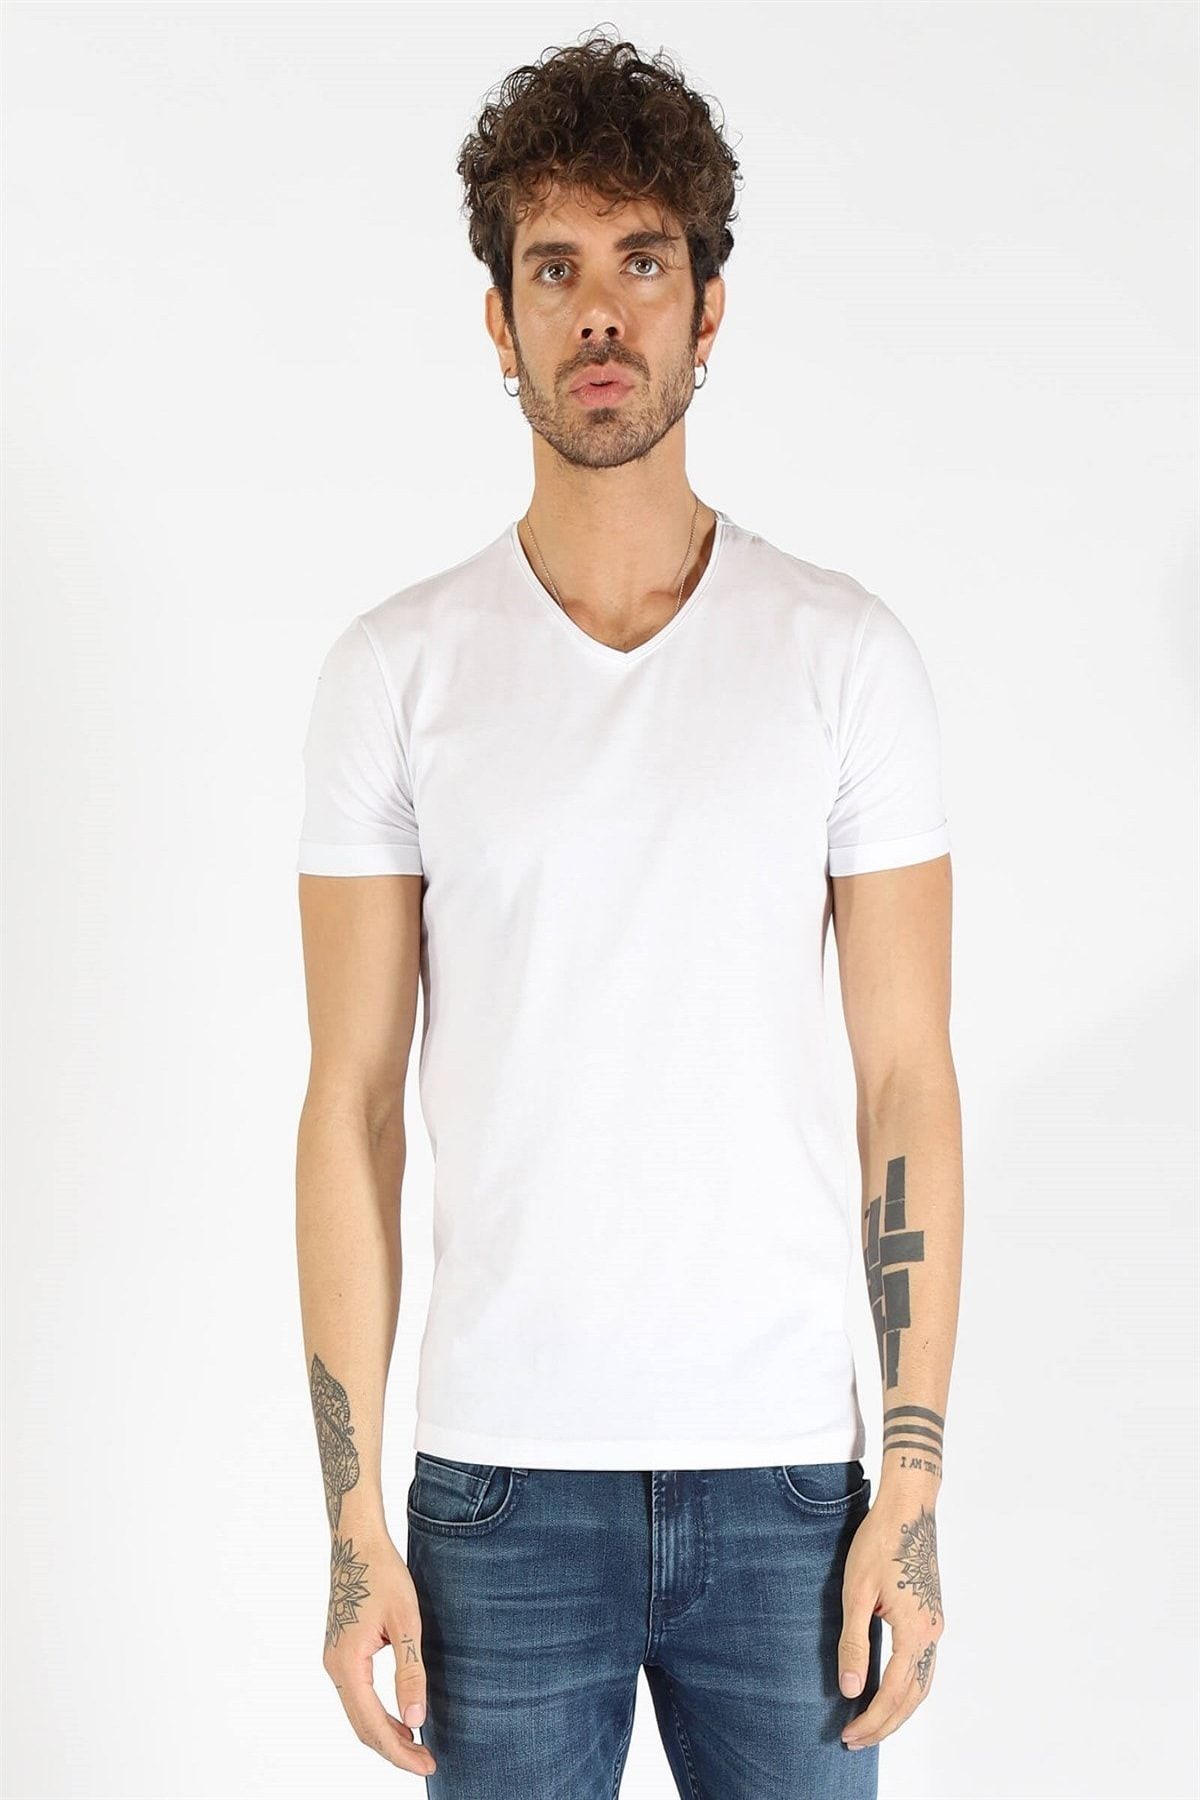 Twister Jeans Erkek Twister T-shirt 1827 (T) Beyaz